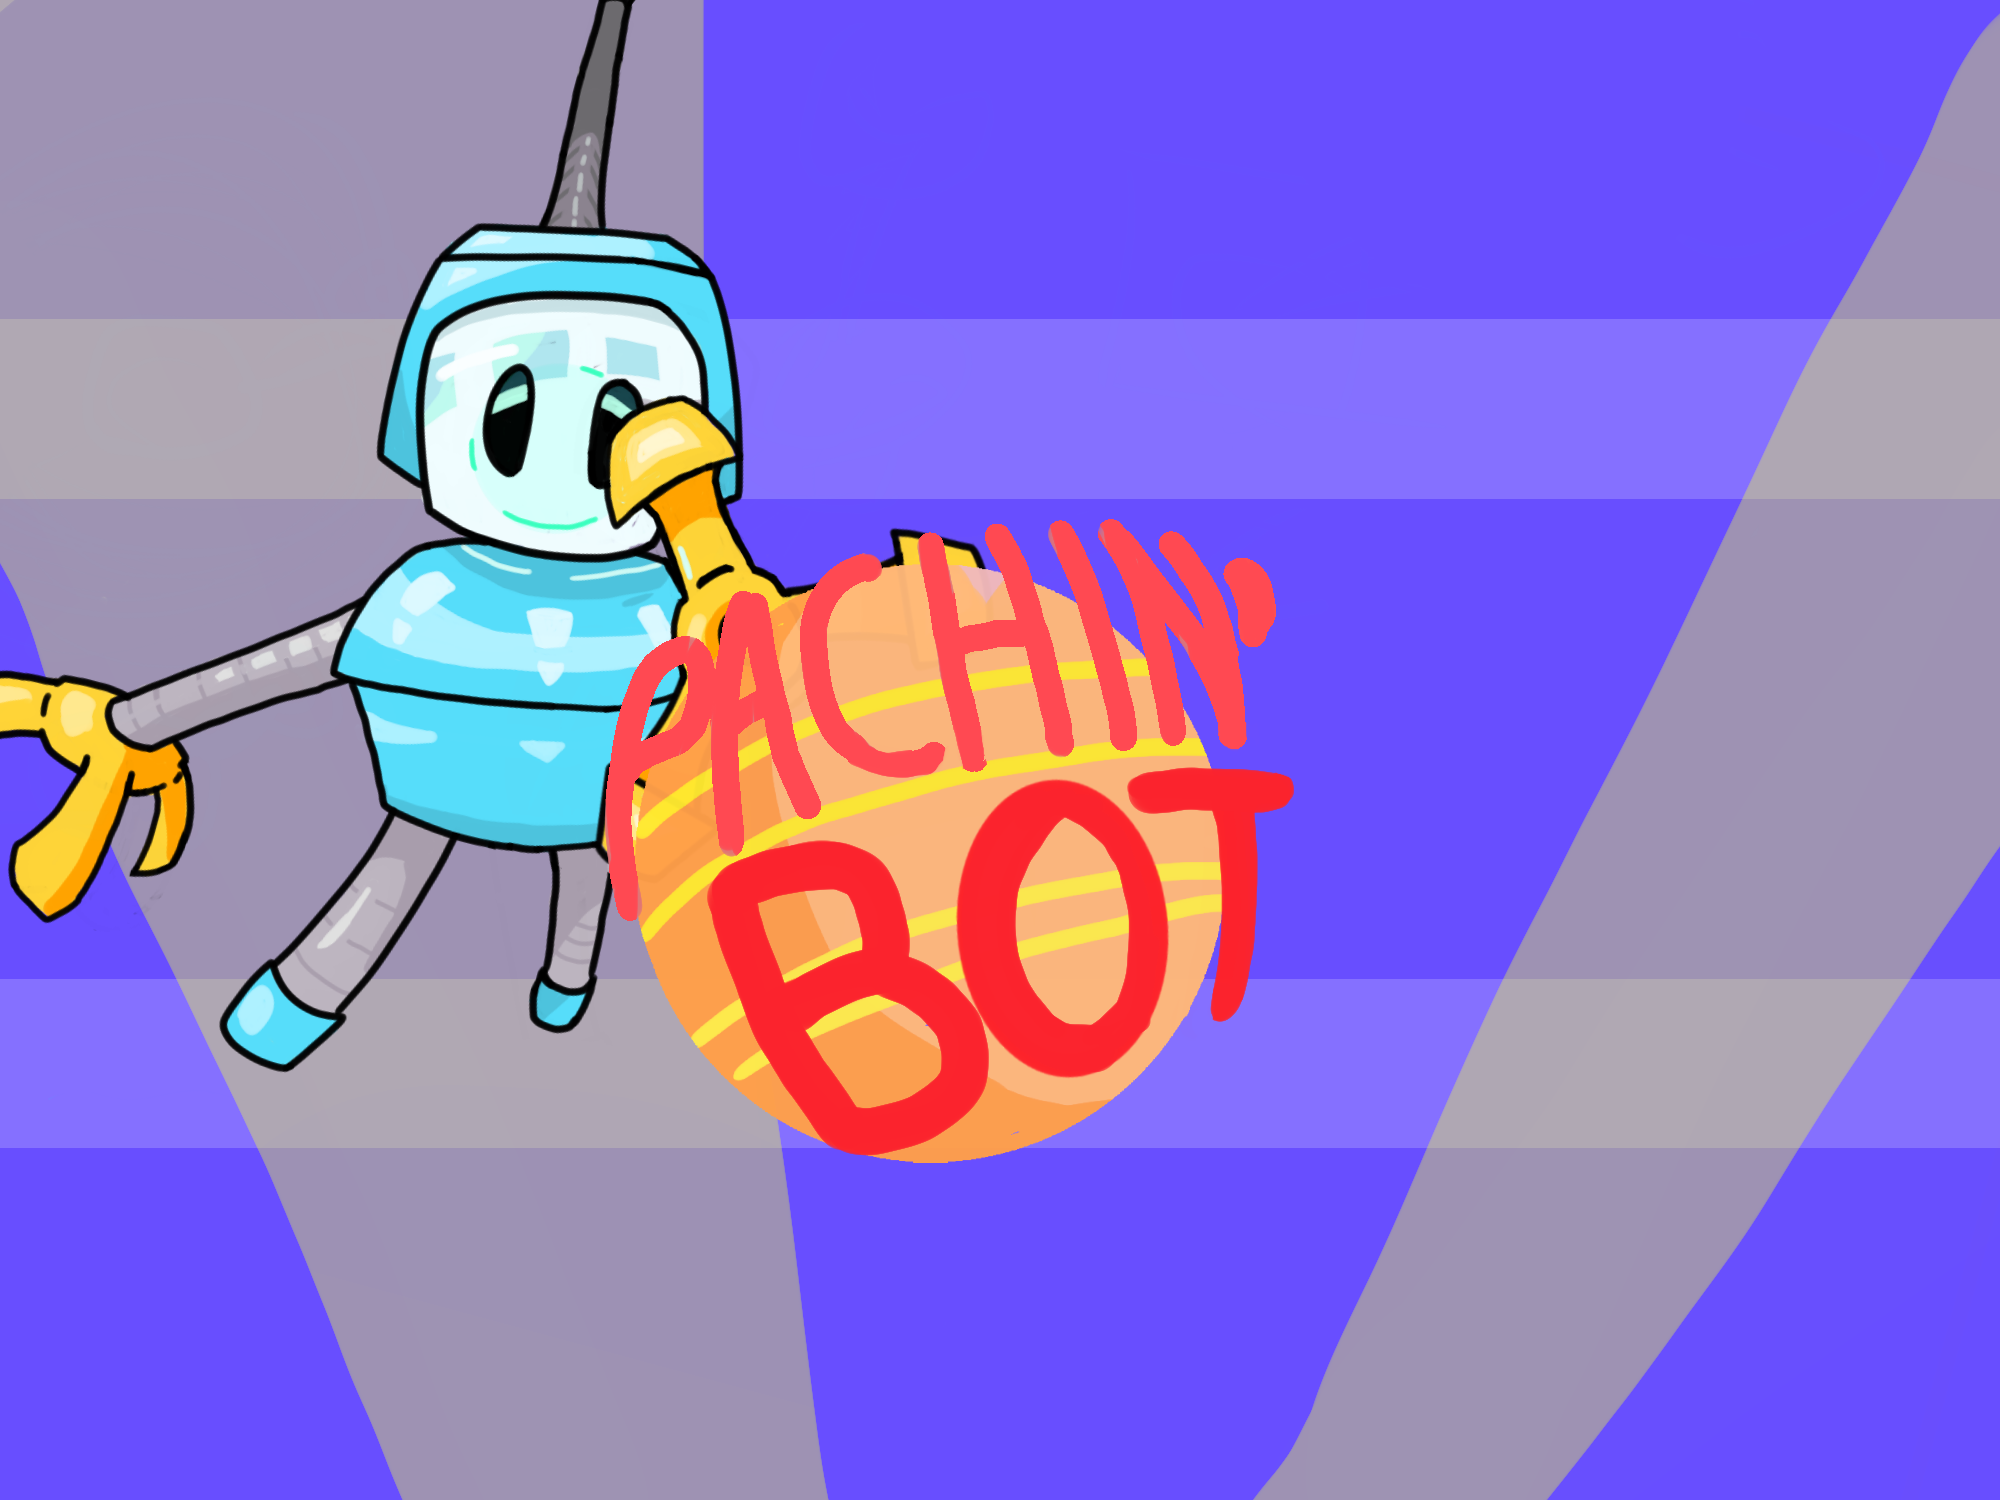 Pachin'Bot